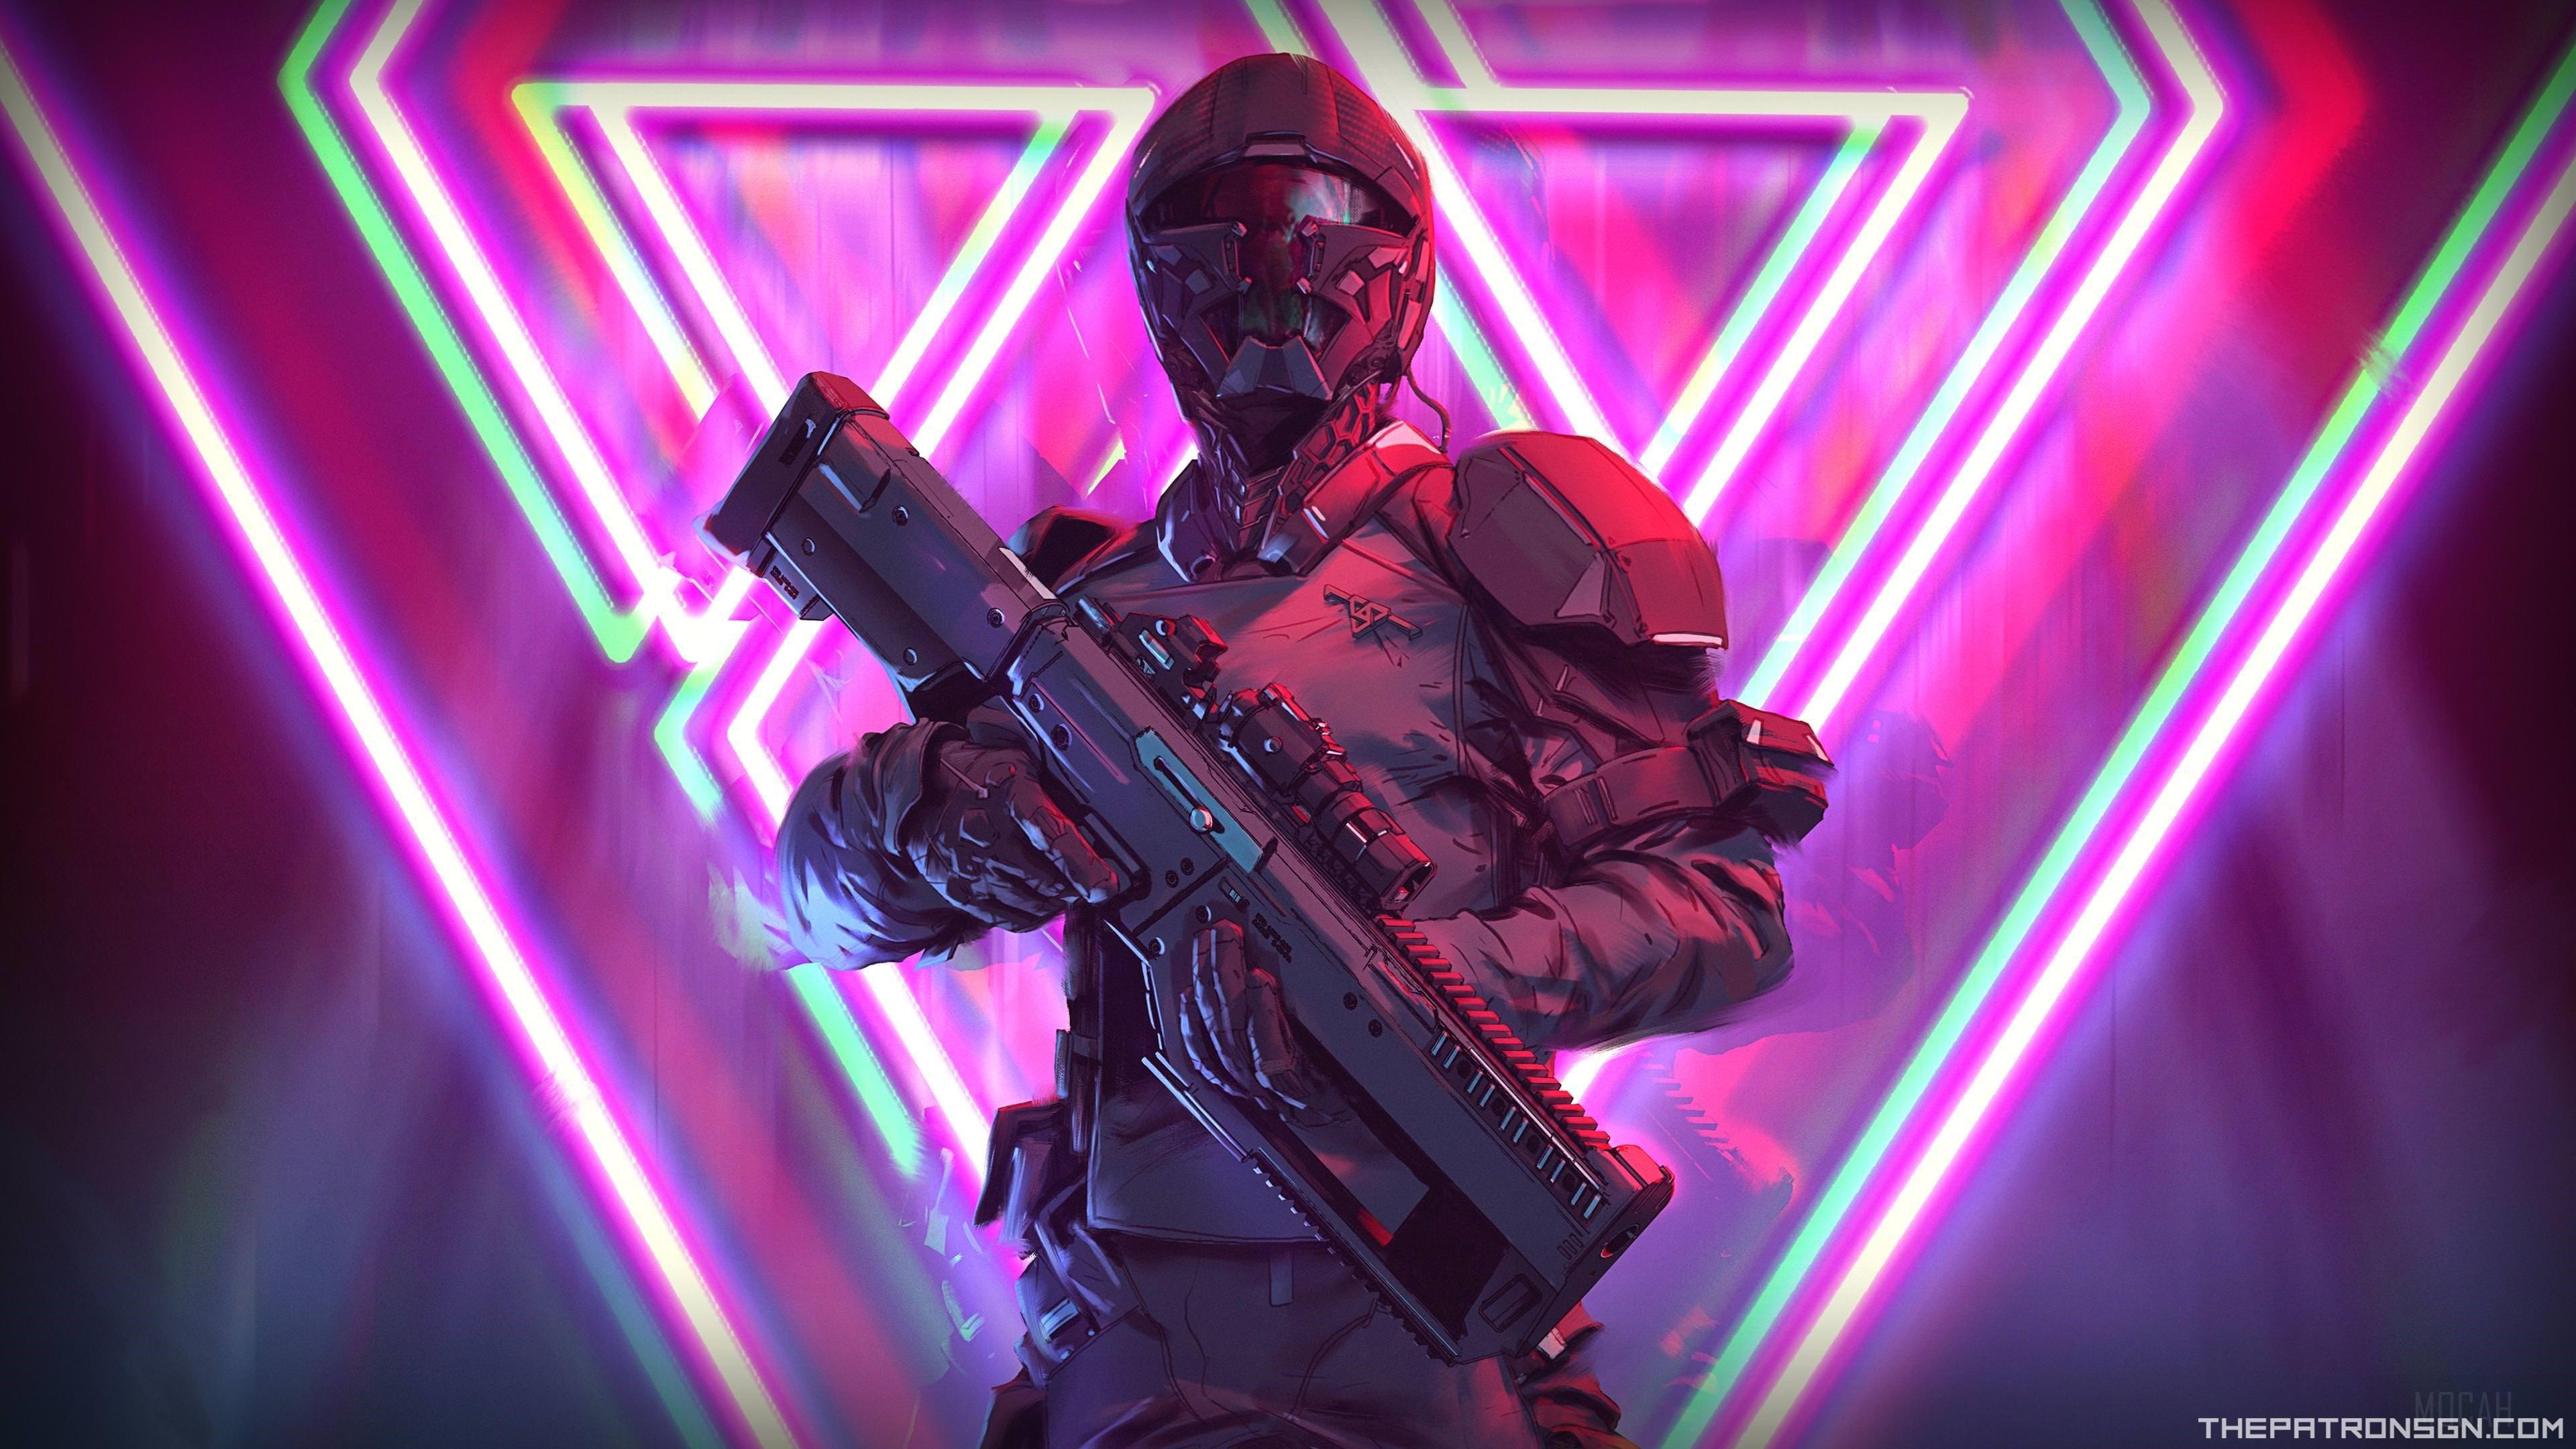 HD wallpaper, Neon Weapon Soldier Science Fiction 4K